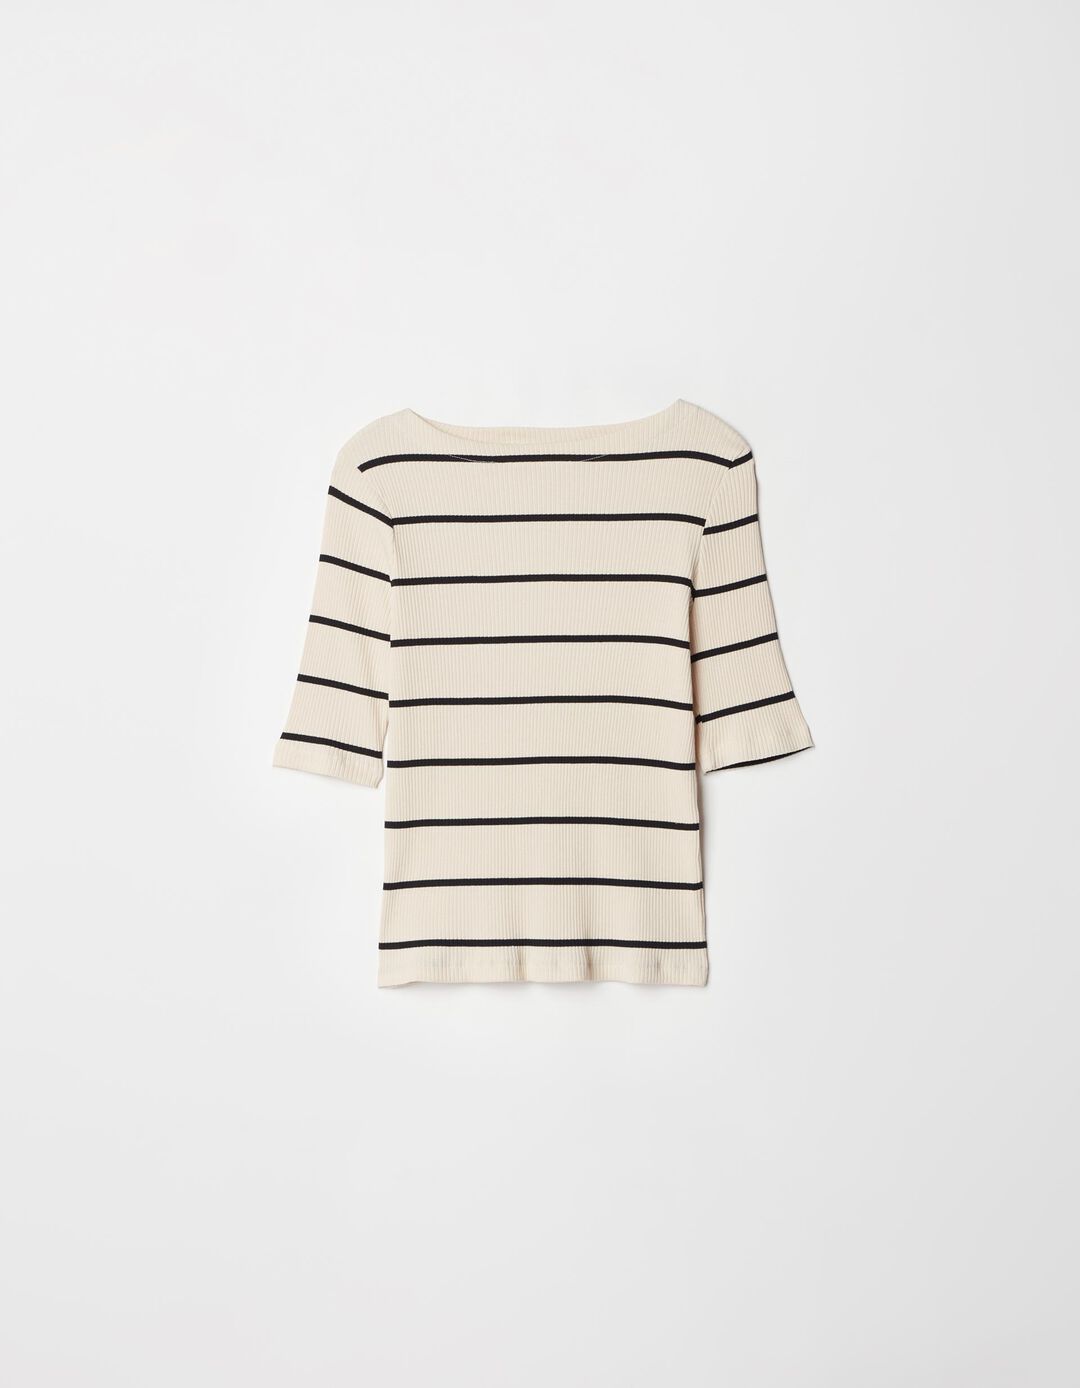 Ribbed Striped T-shirt, Women, Light Beige